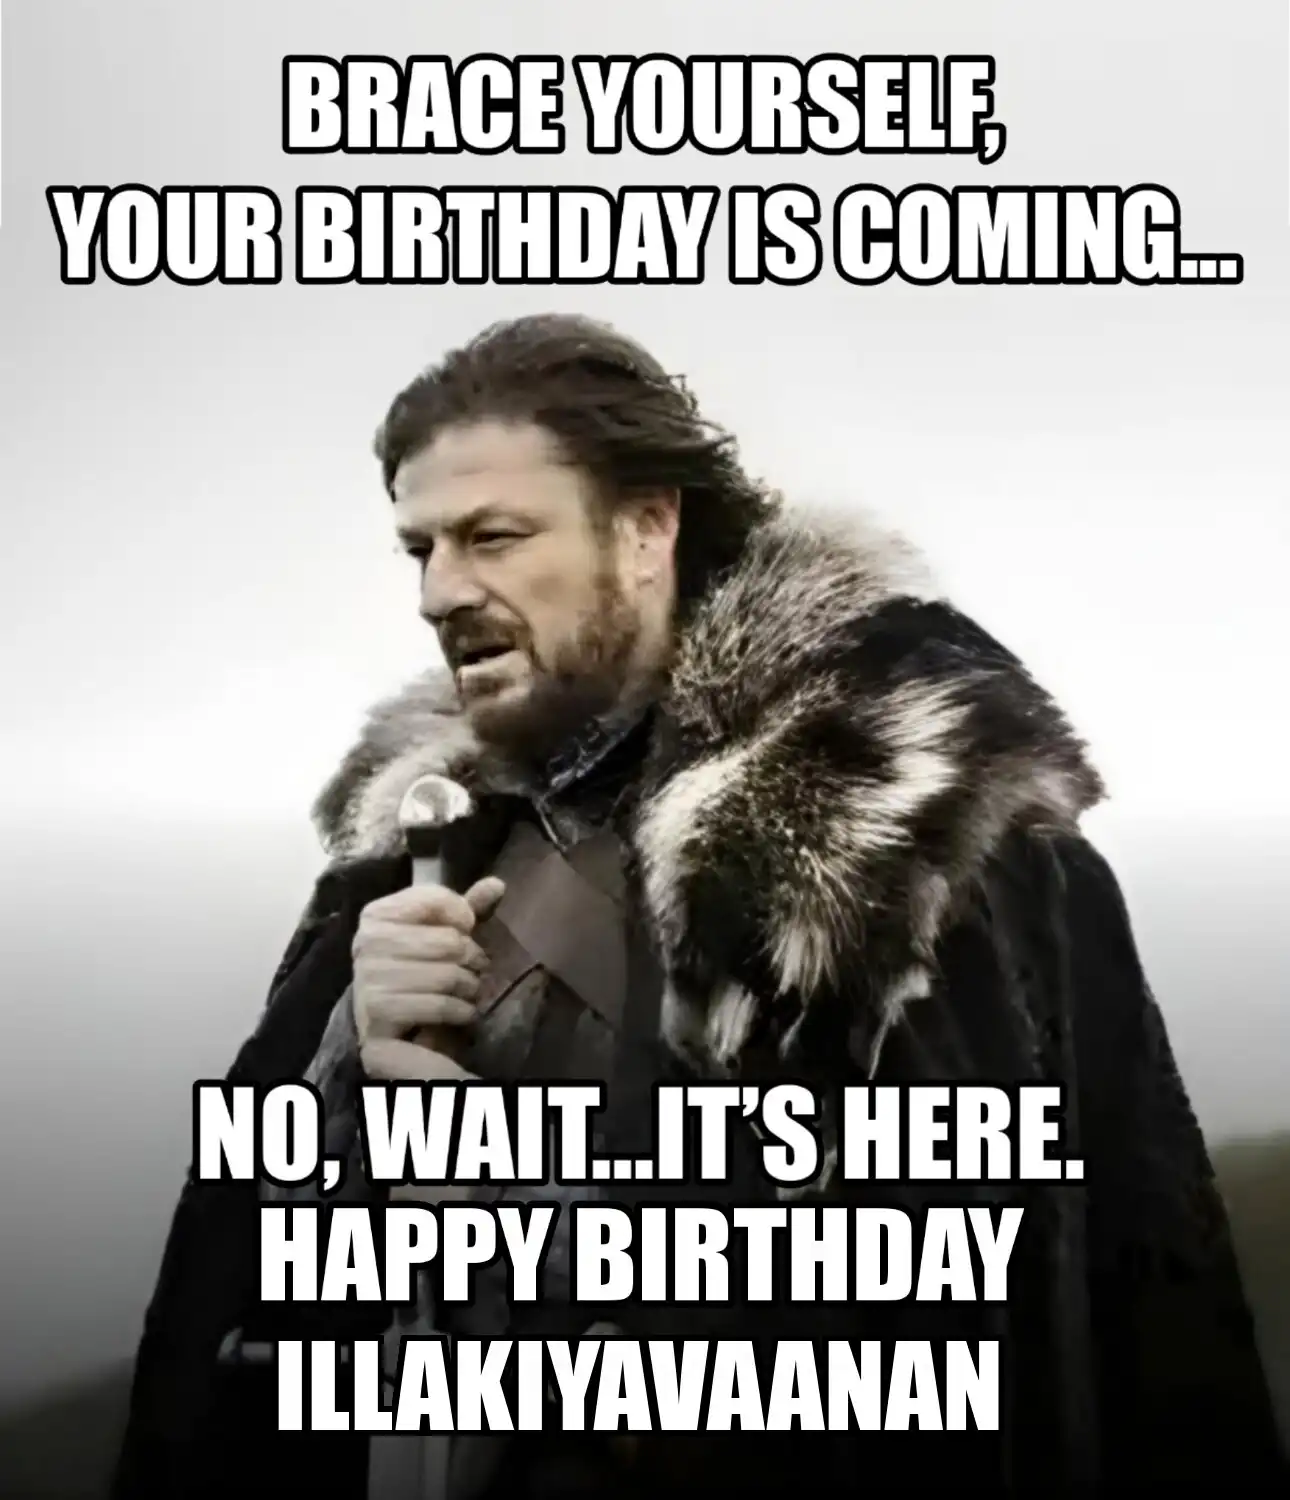 Happy Birthday Illakiyavaanan Brace Yourself Your Birthday Is Coming Meme